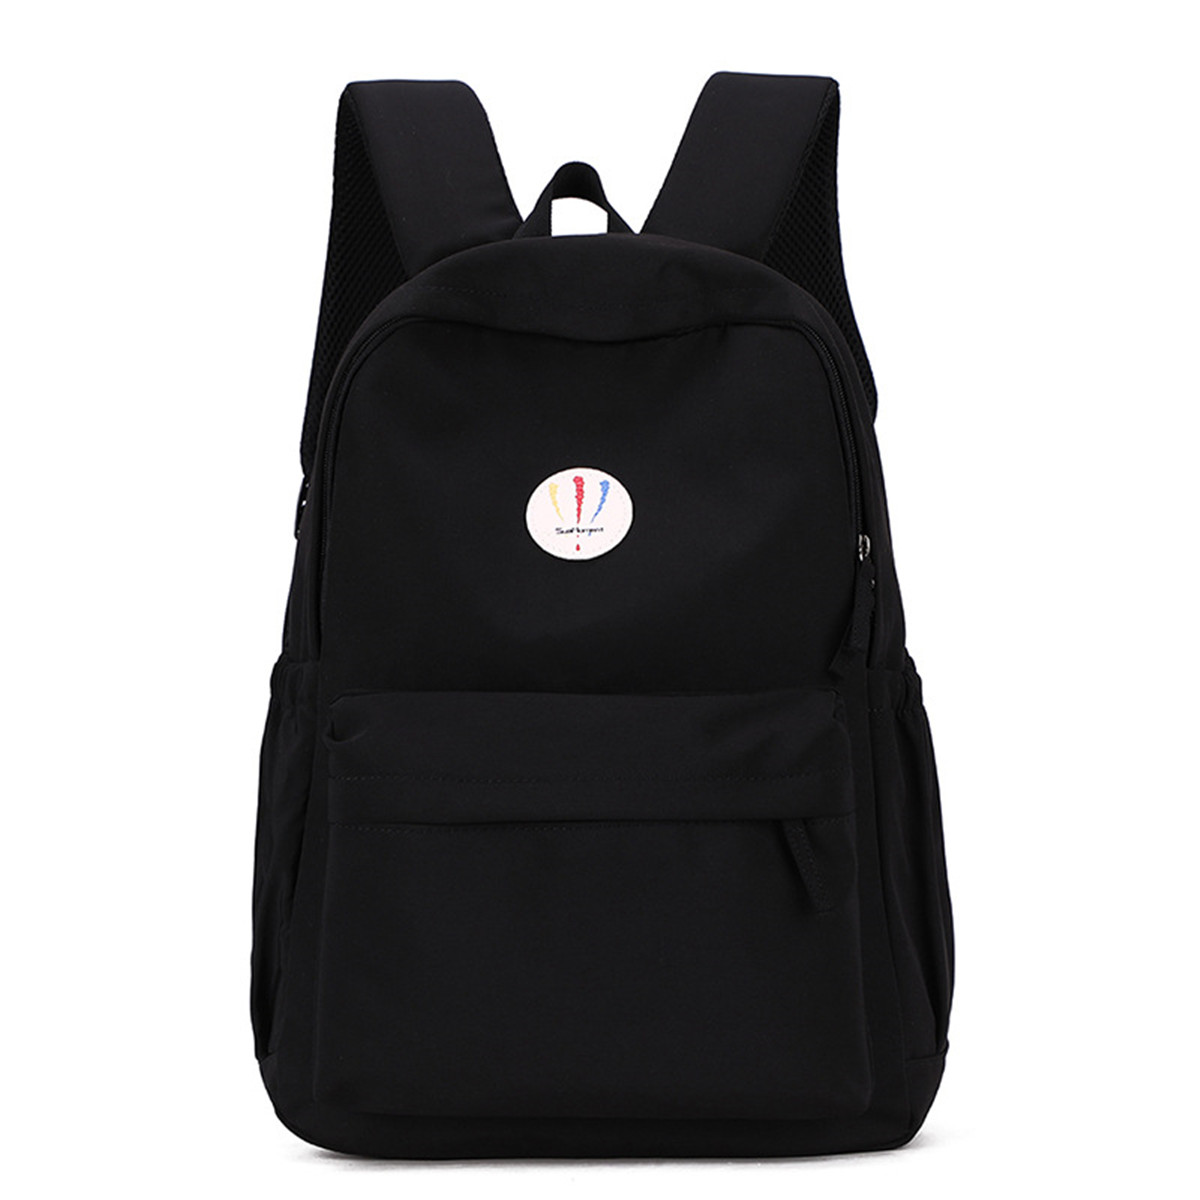 

19л Nylon рюкзак рюкзак 14inch ноутбук студент Школа плечо Сумка На открытом воздухе путешествия